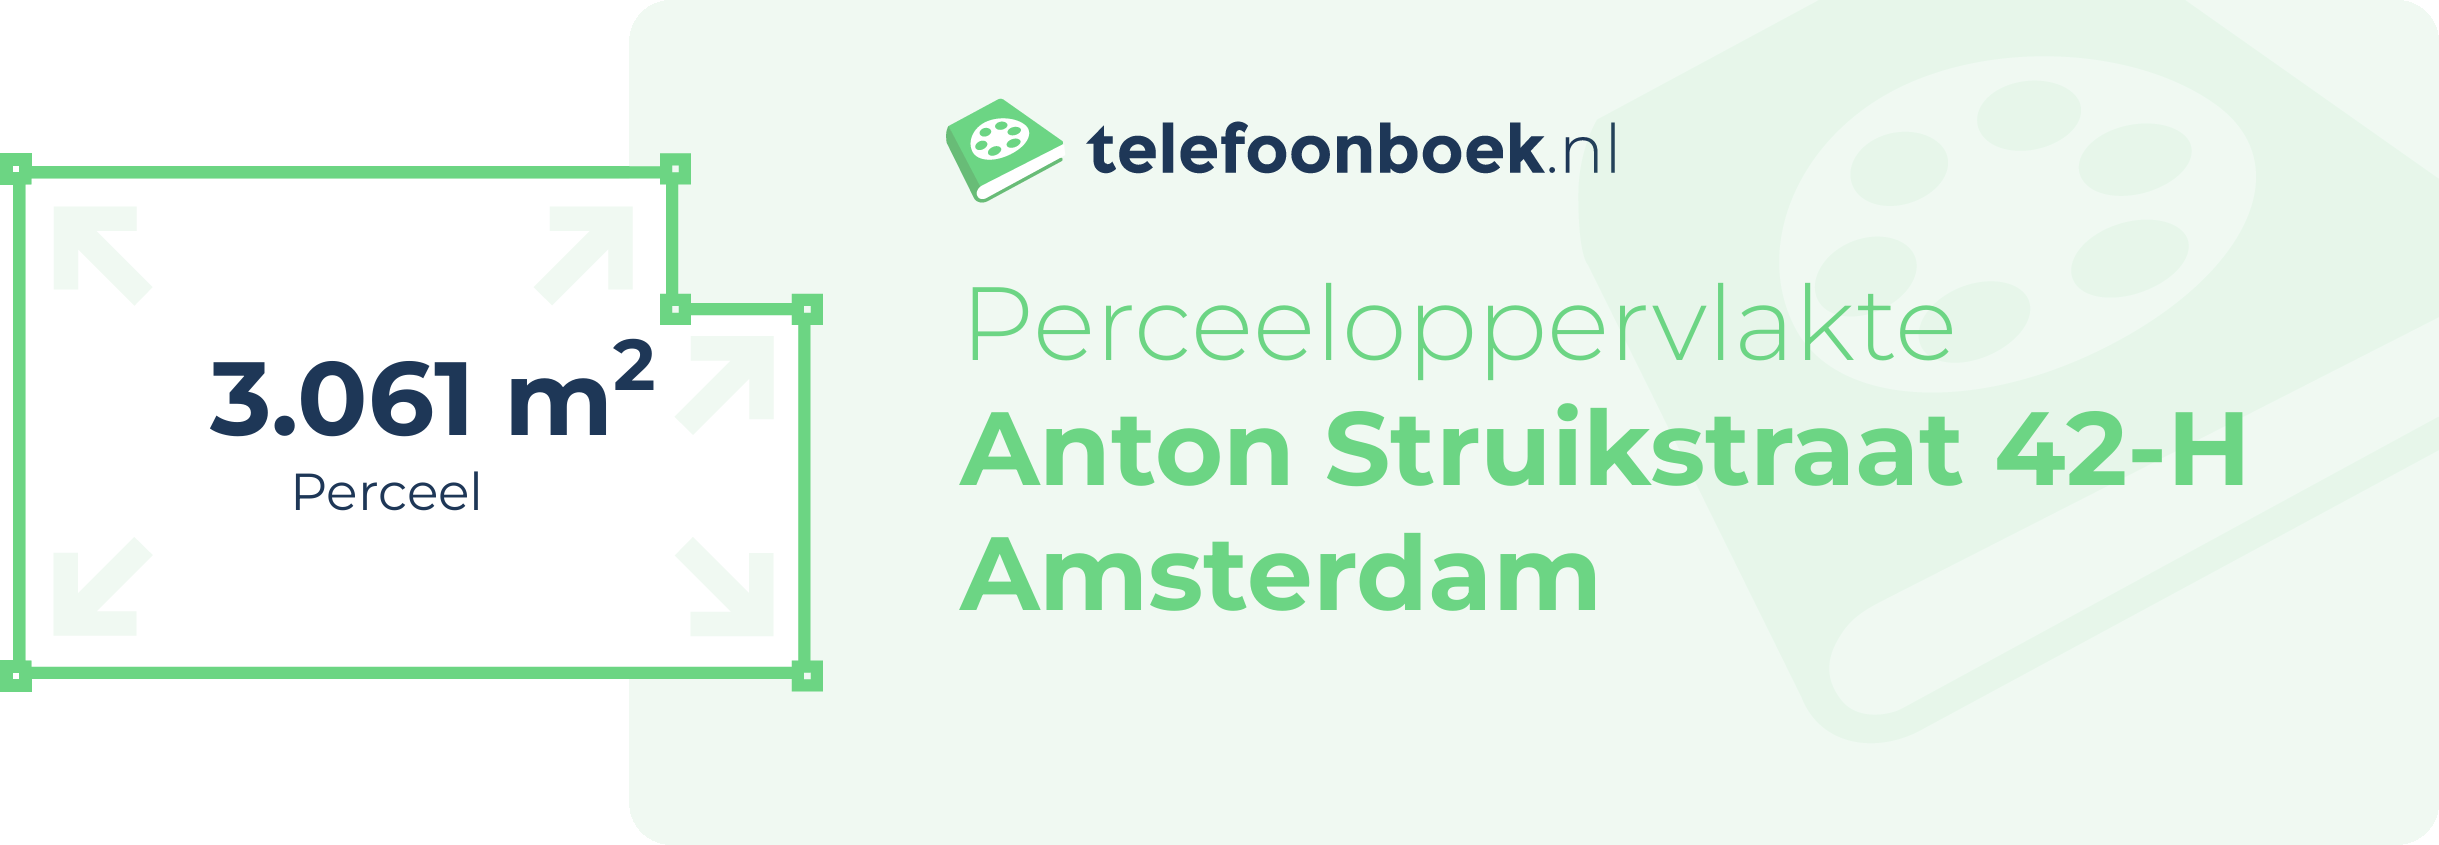 Perceeloppervlakte Anton Struikstraat 42-H Amsterdam